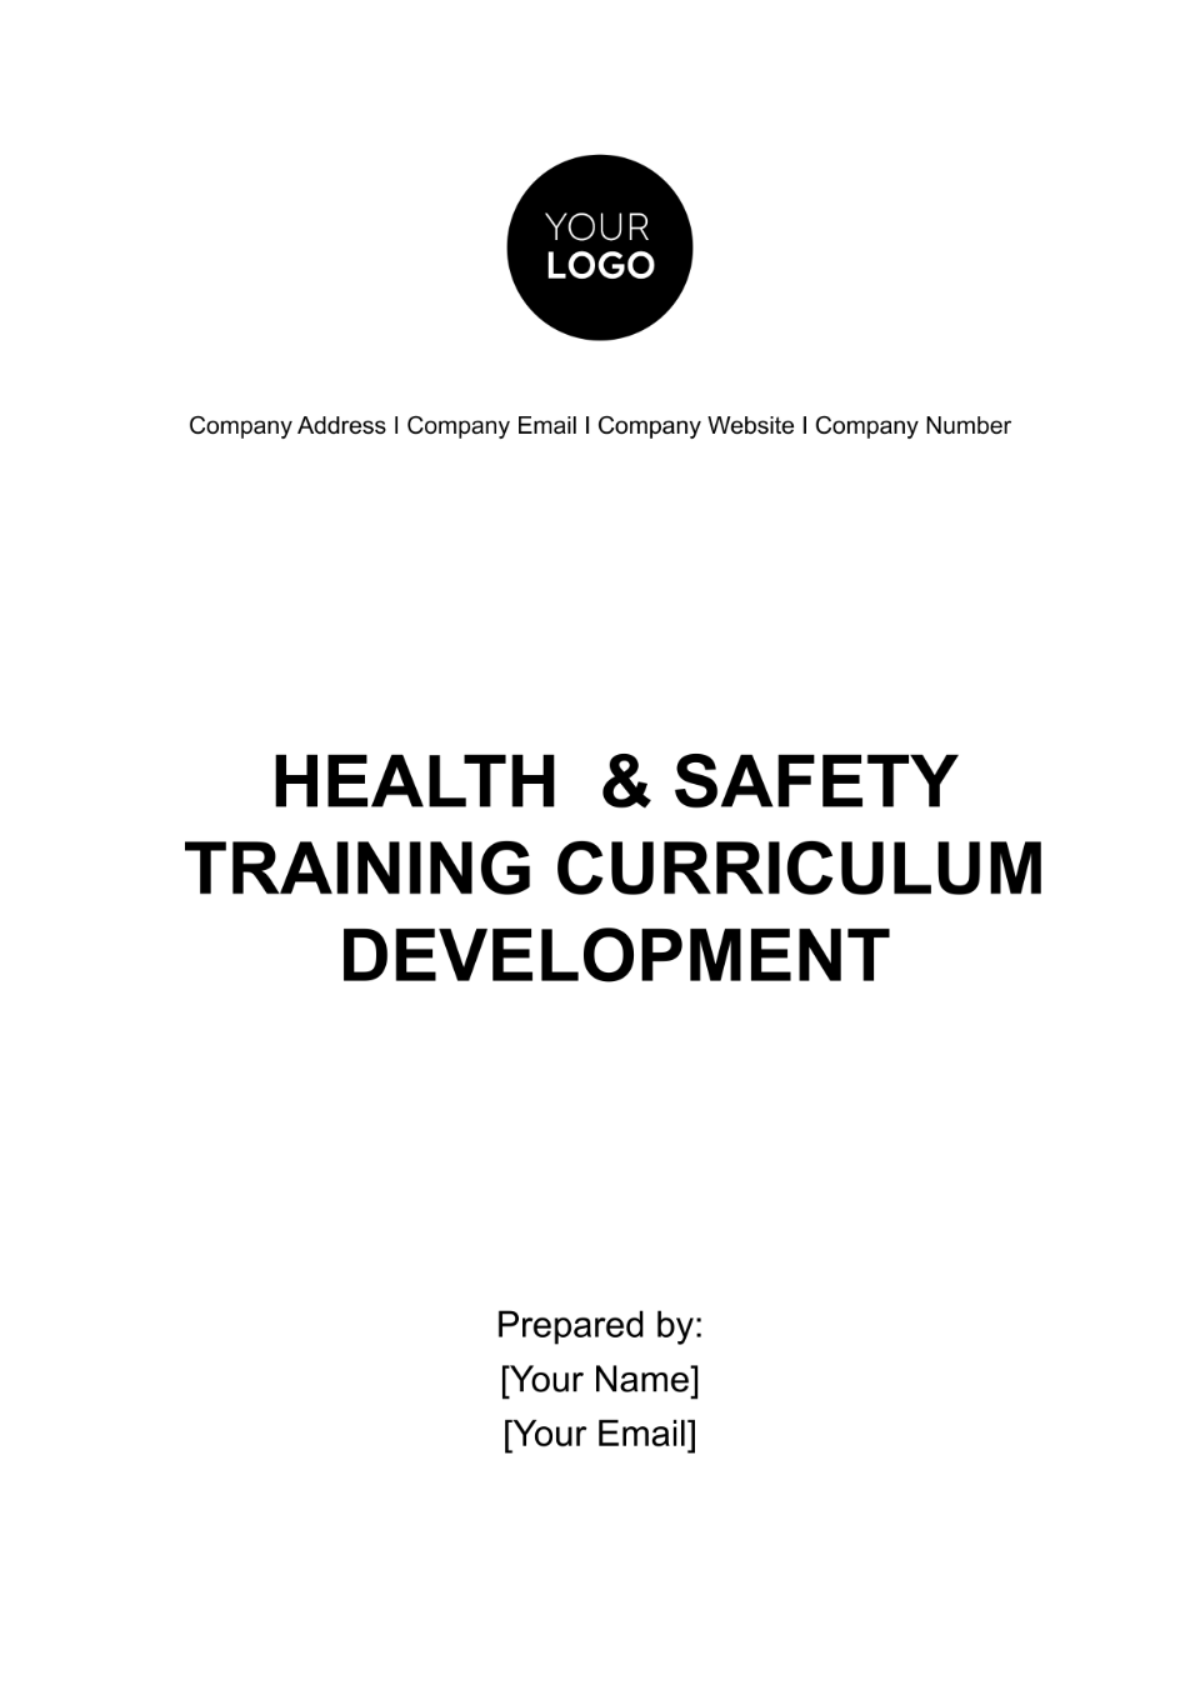 Health & Safety Training Curriculum Development Template